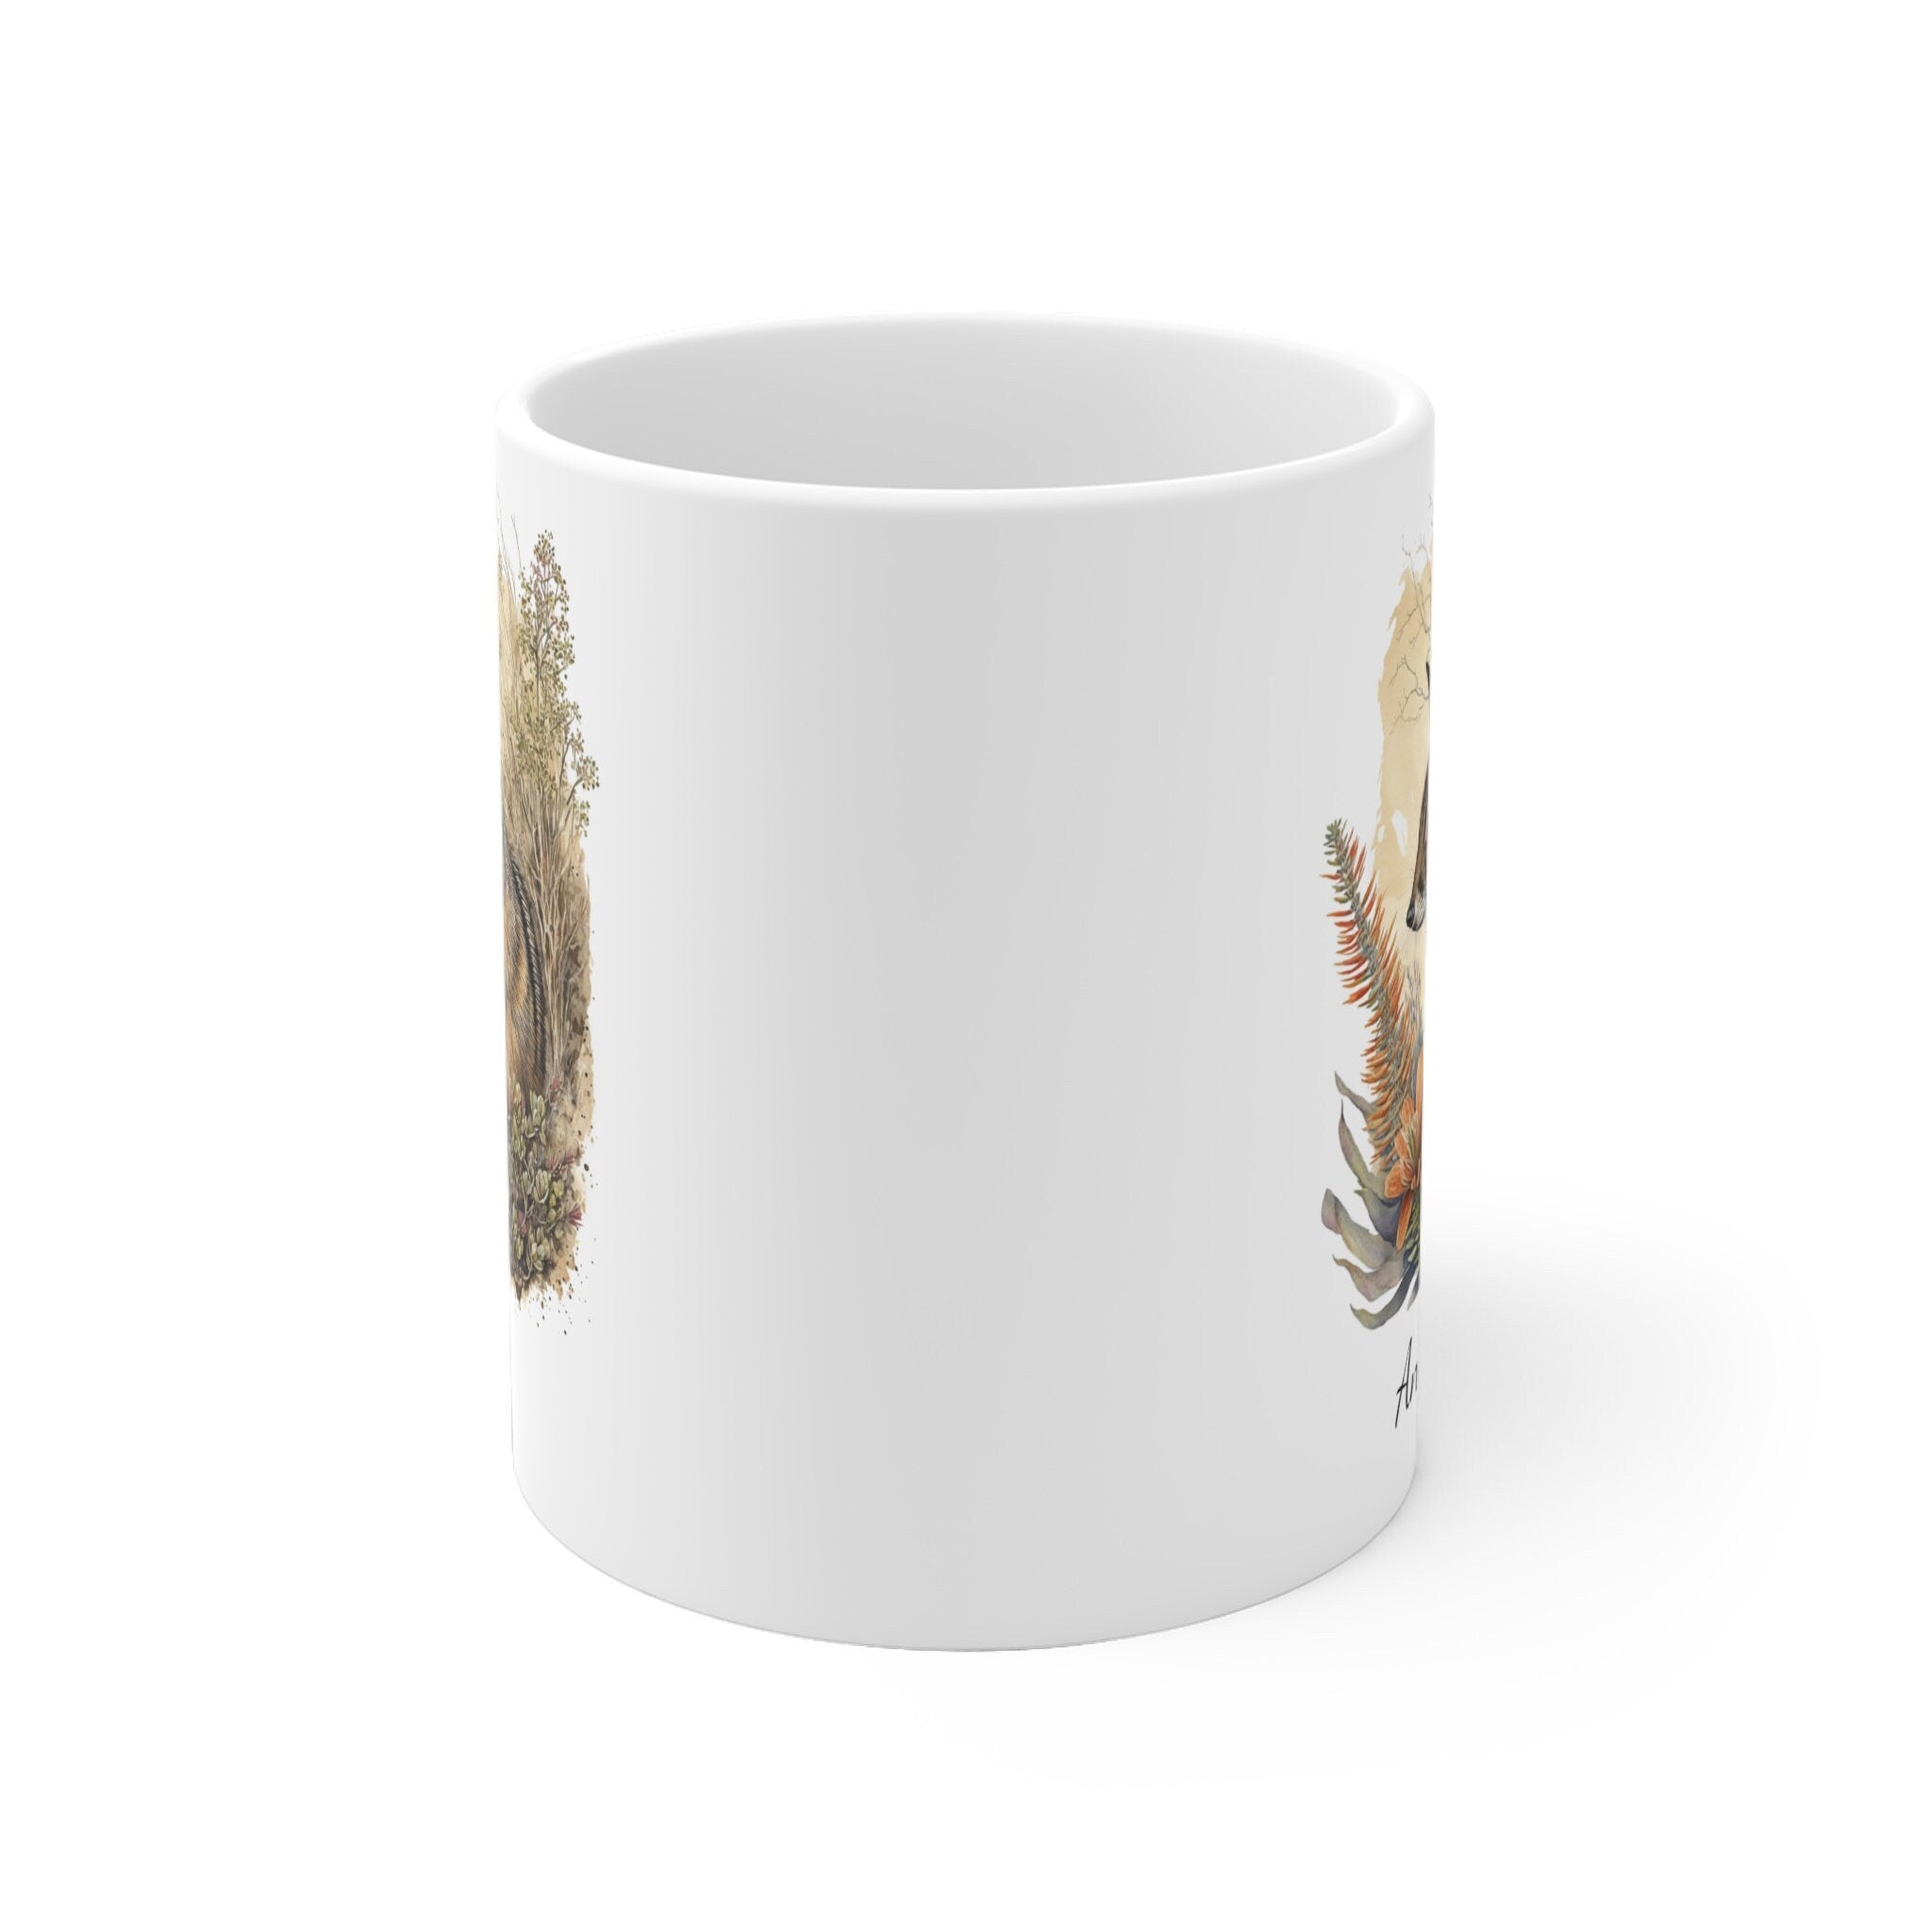 Personalized Numbat Coffee Mug